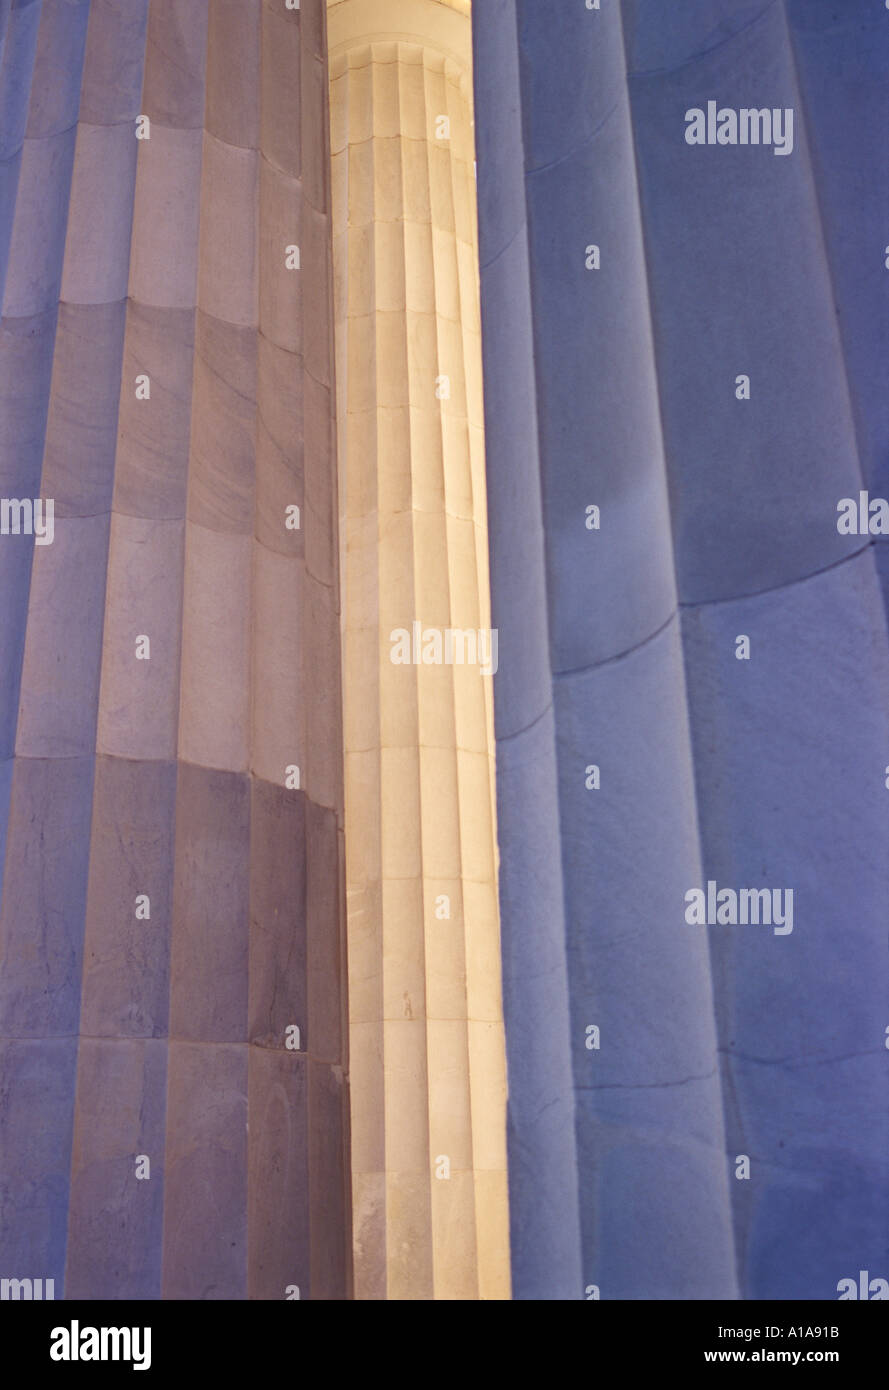 Lincoln Memorial Columns in Washington D.C. Stock Photo